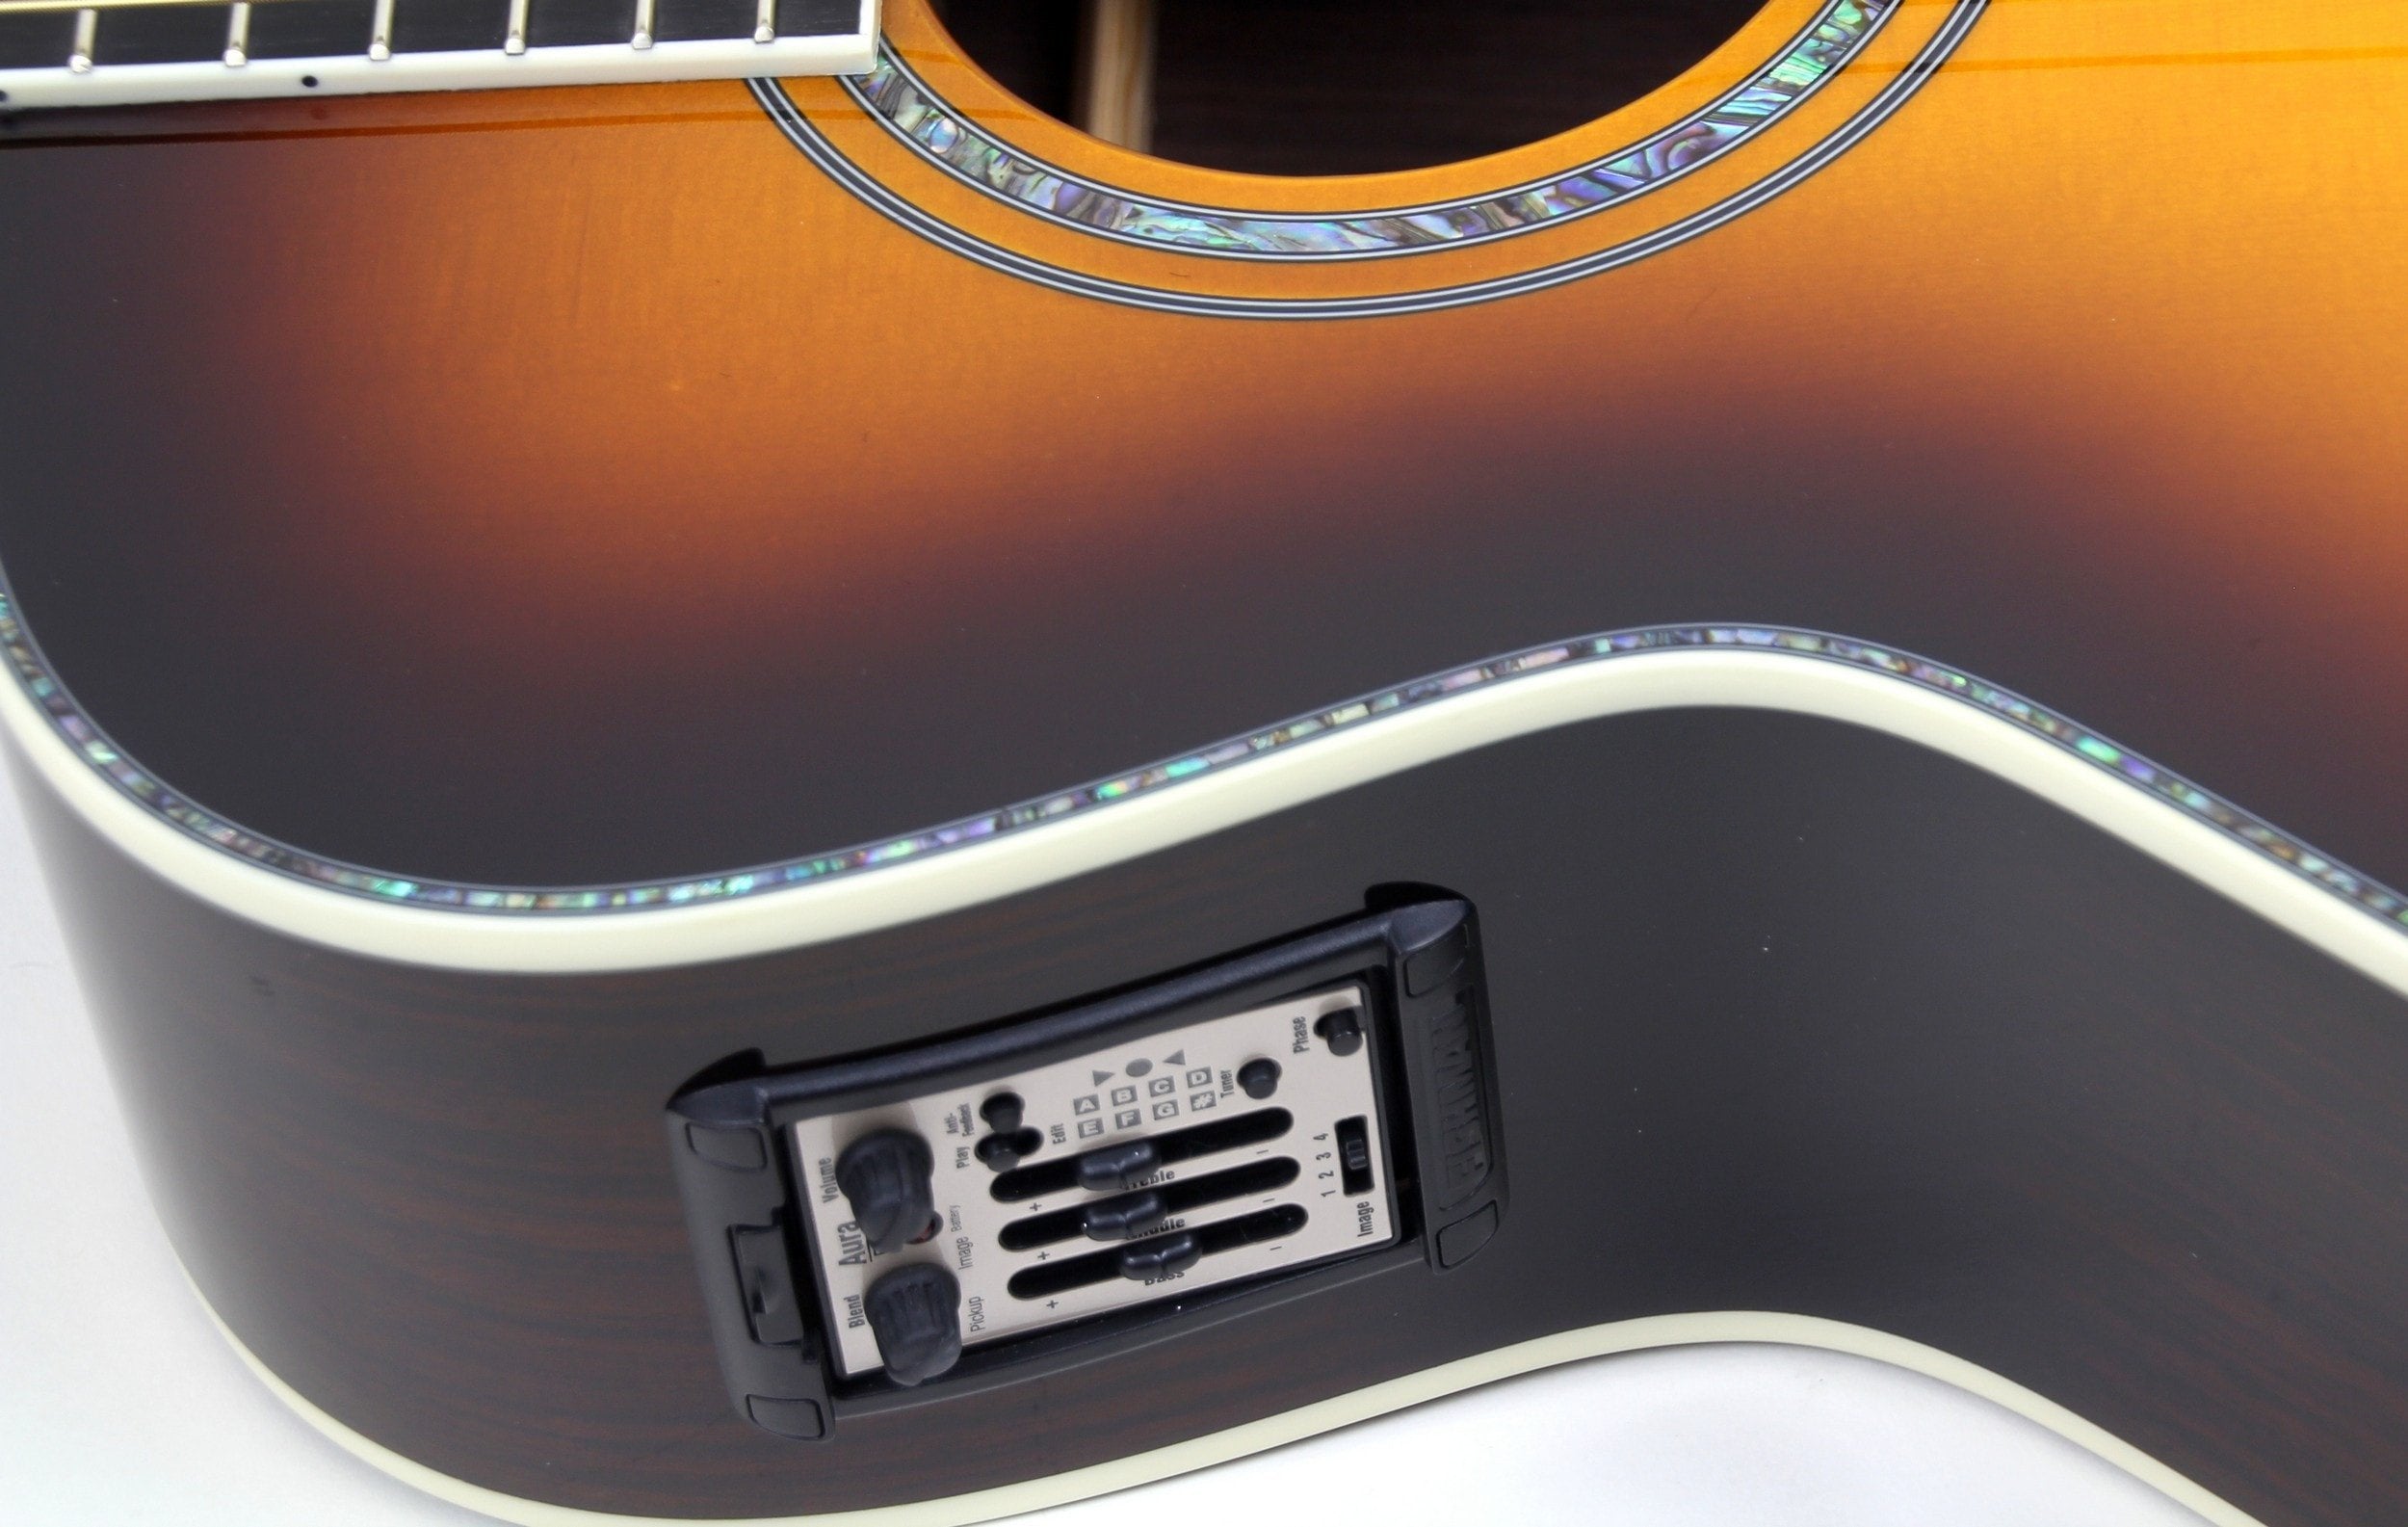 Ibanez JSA20 Joe Satriani Signature Acoustic Electric Guitar